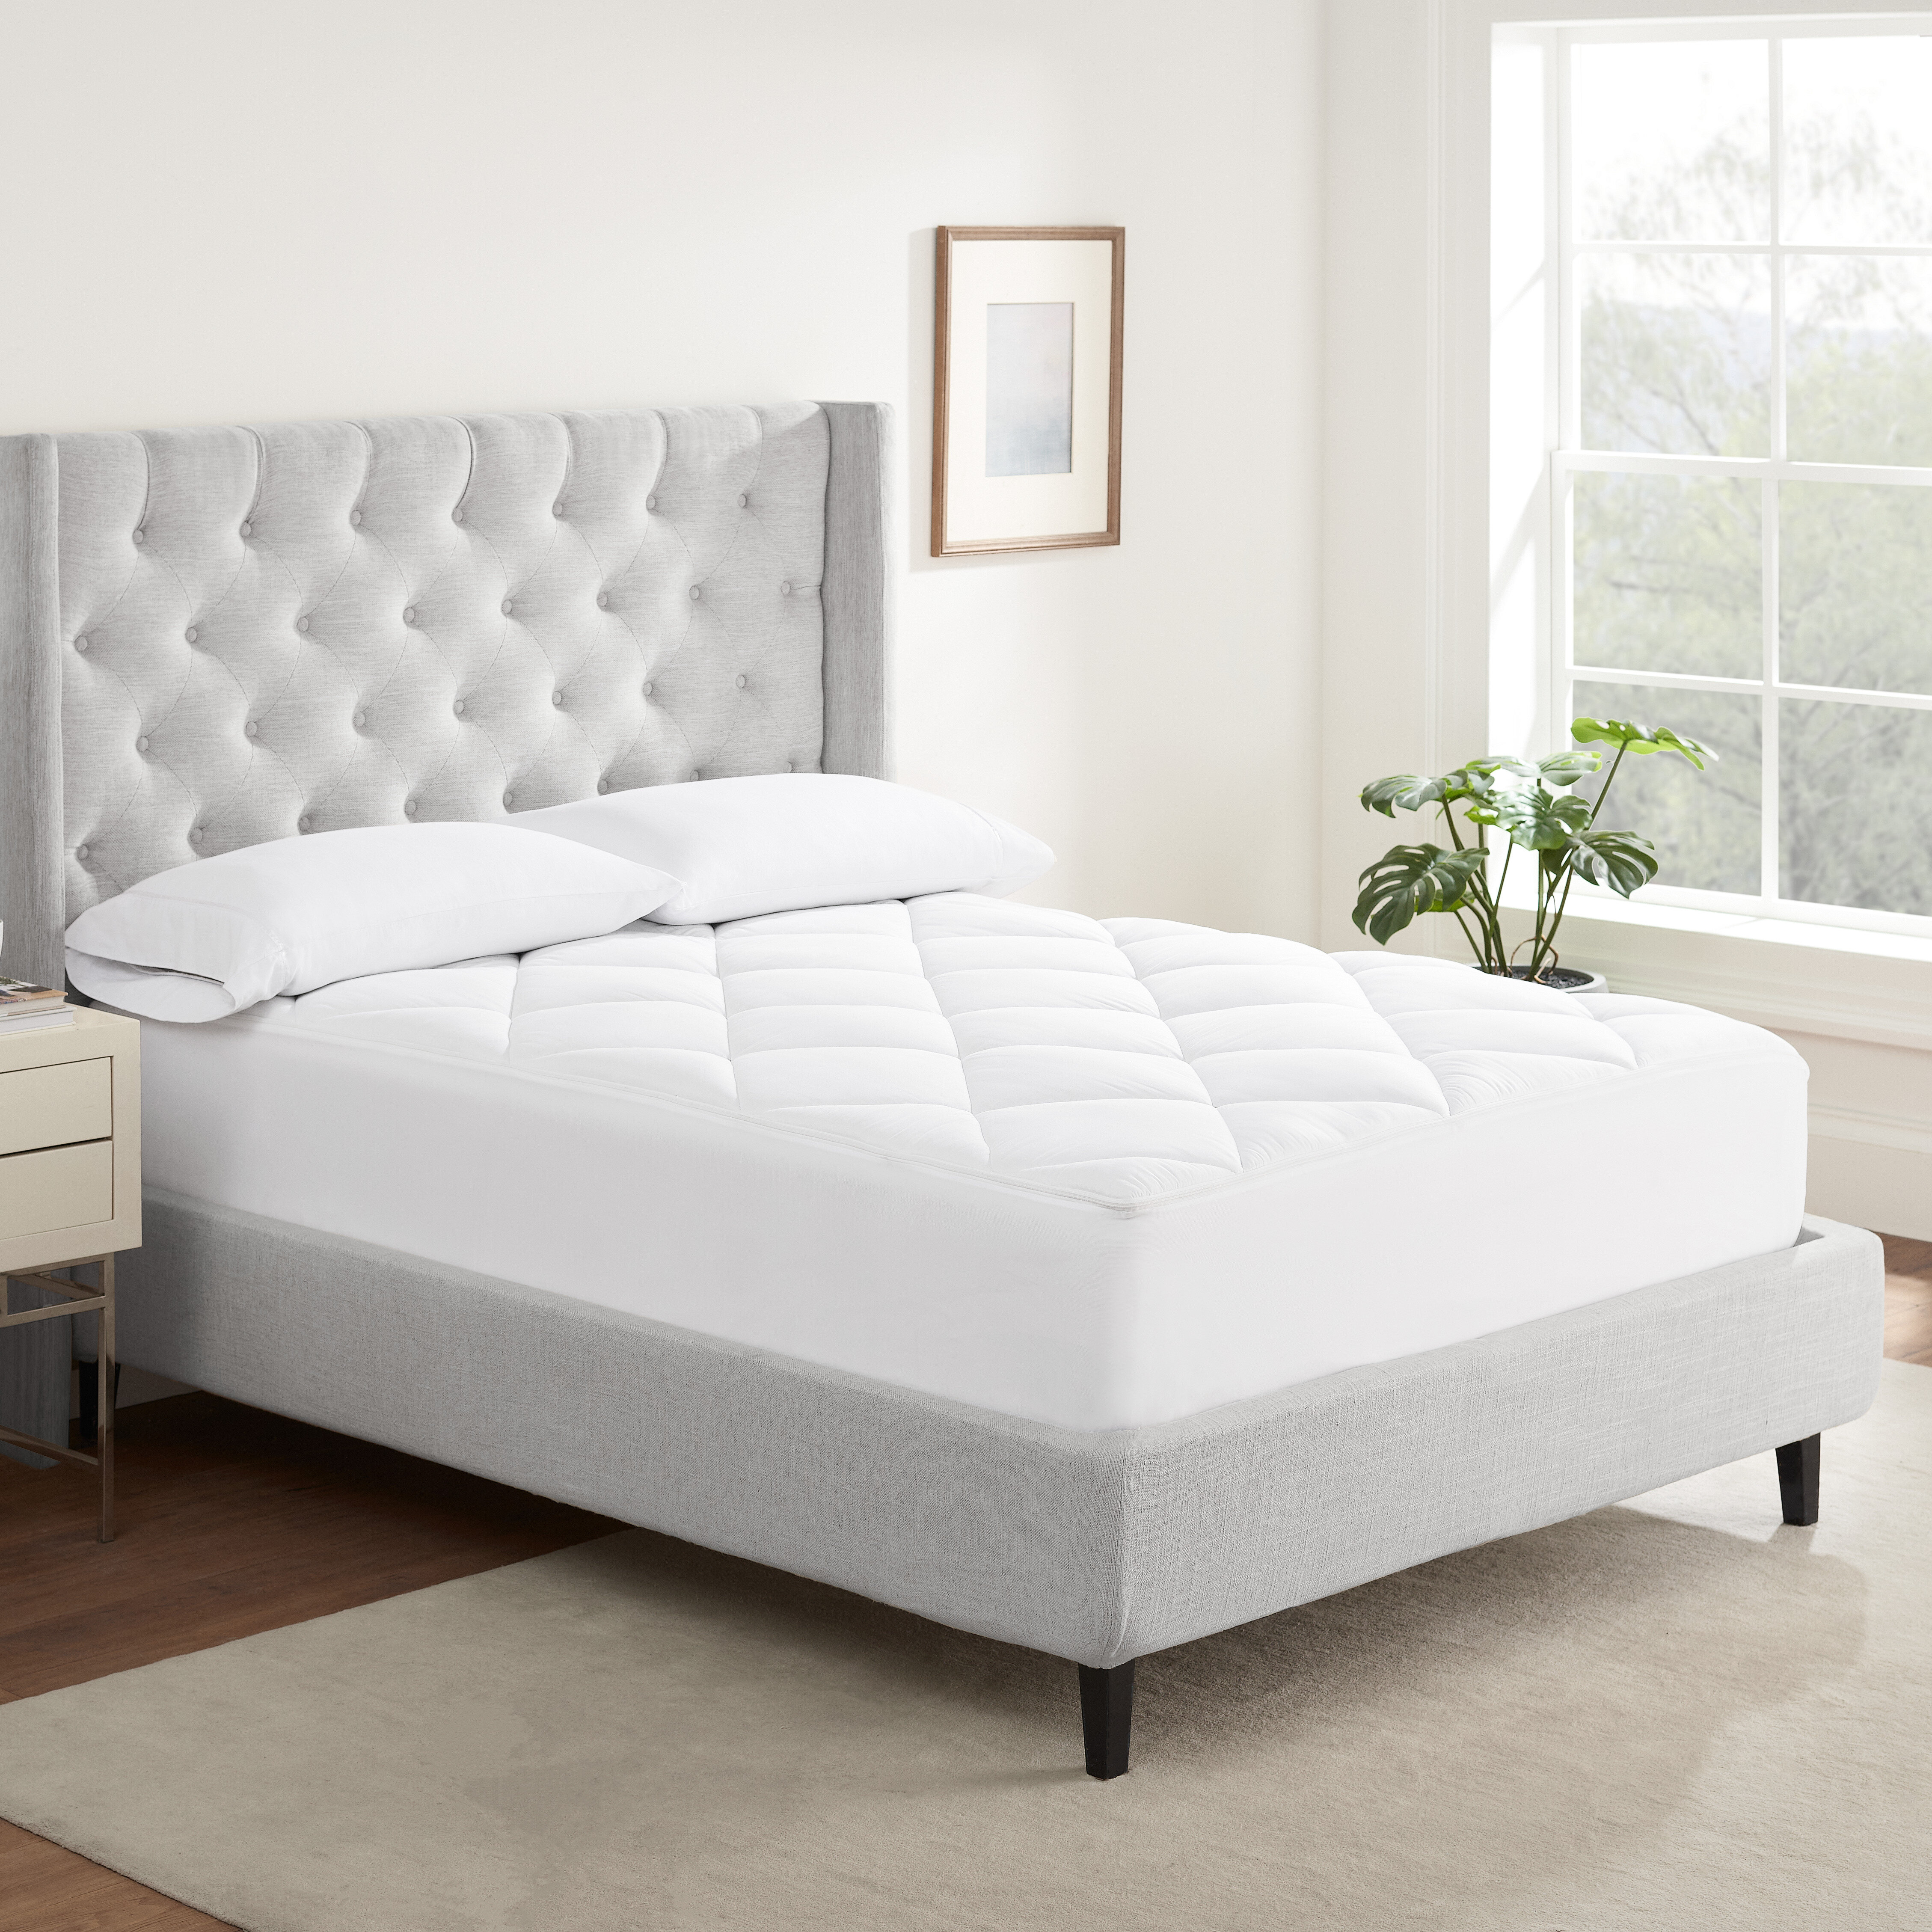 Serta Luxury Soft Comfort Mattress Pad - White (Twin)